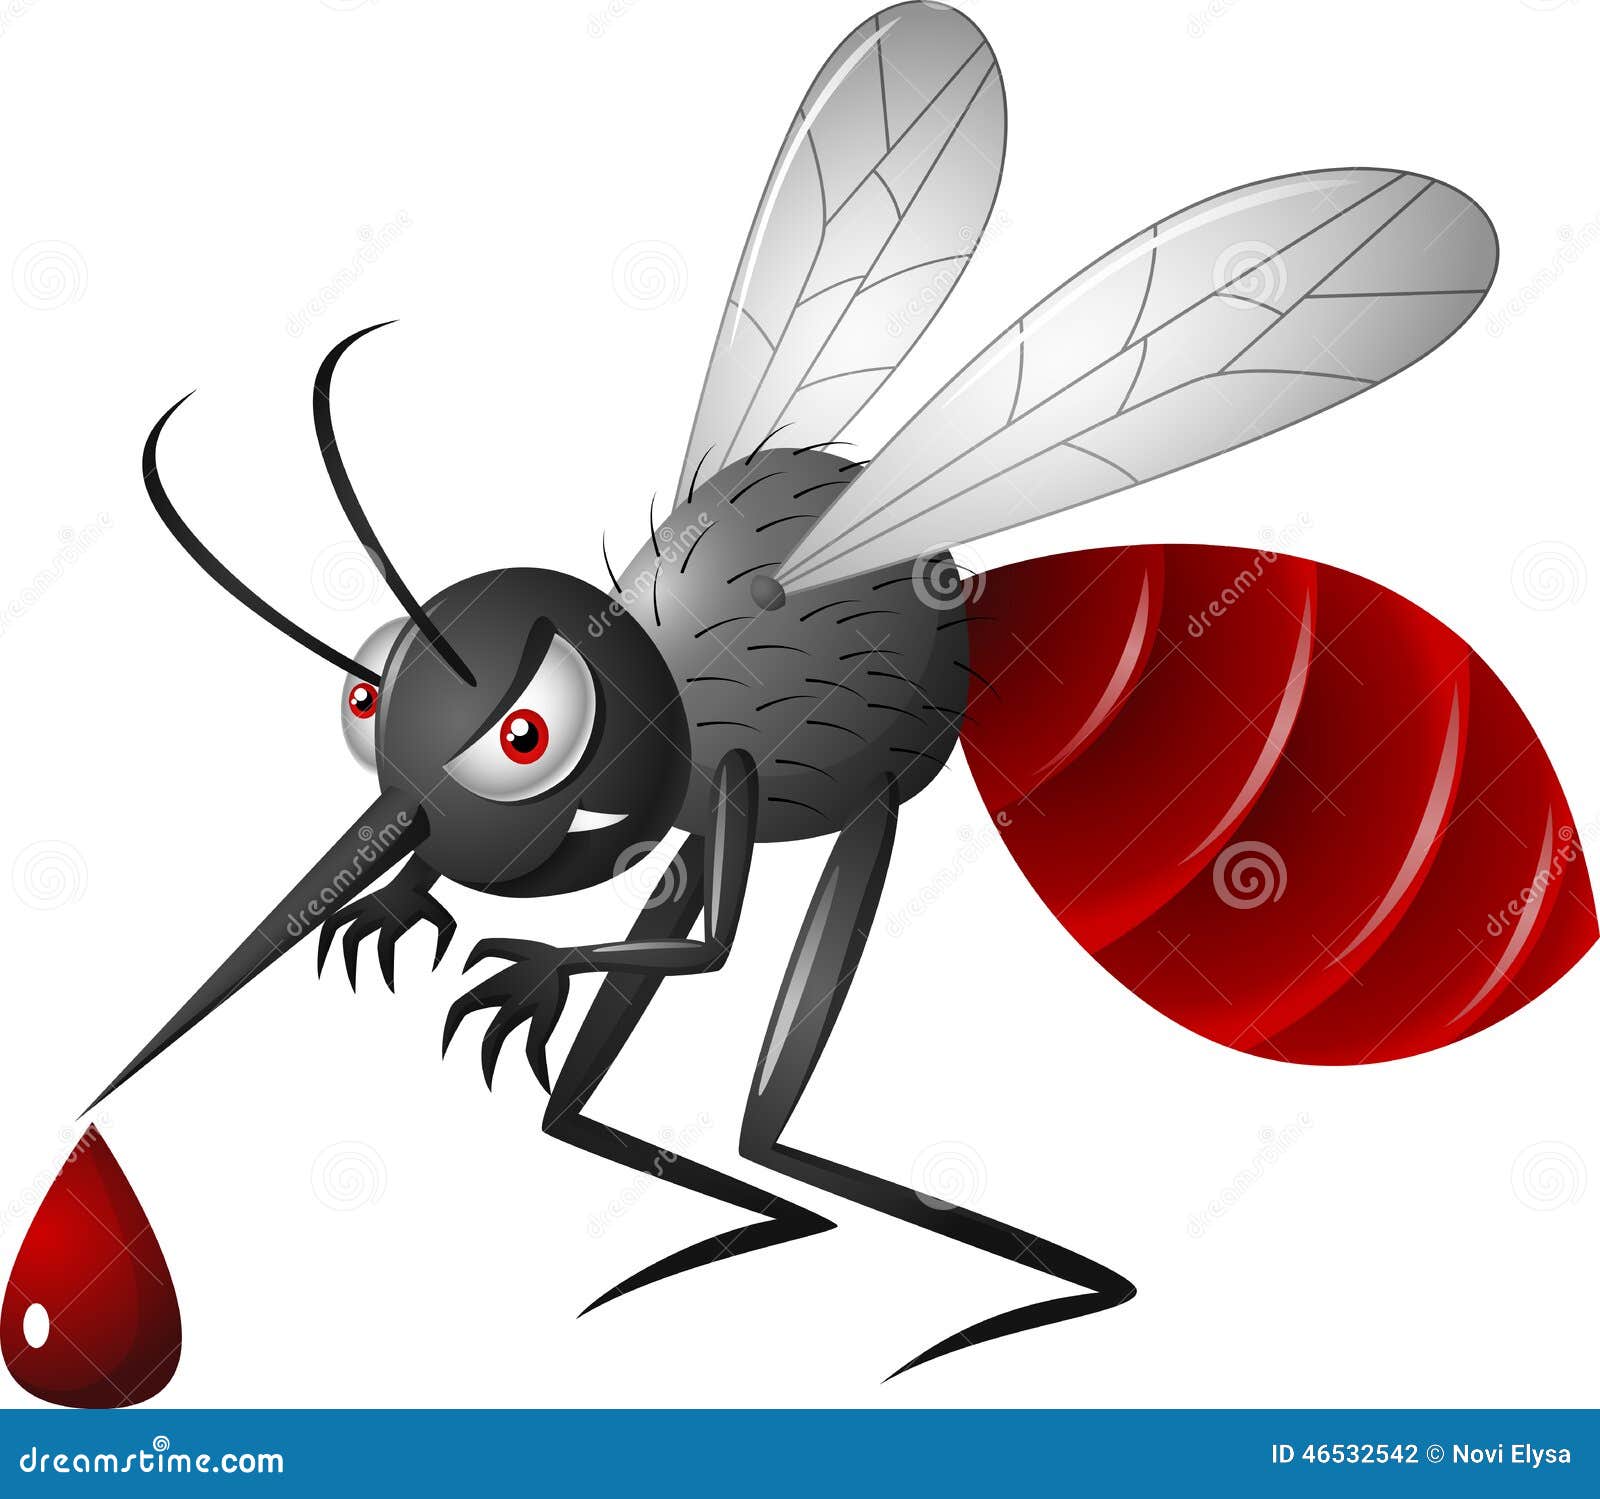 clipart mosquito cartoon - photo #49